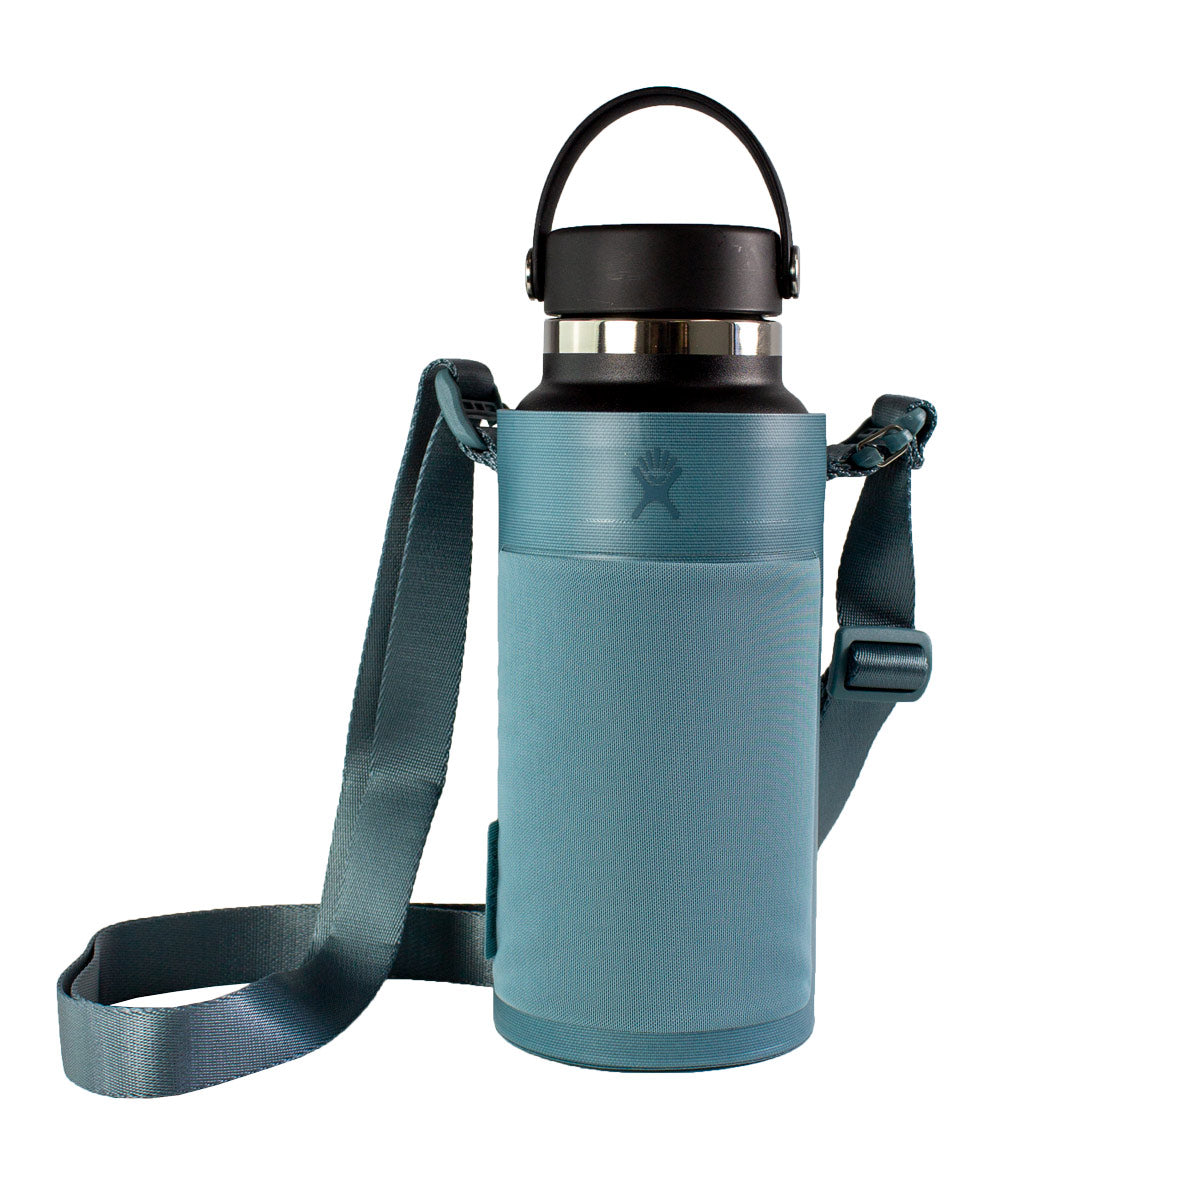 Hydro Flask Tag Along Standard/Small Bottle Sling — Ski Pro AZ